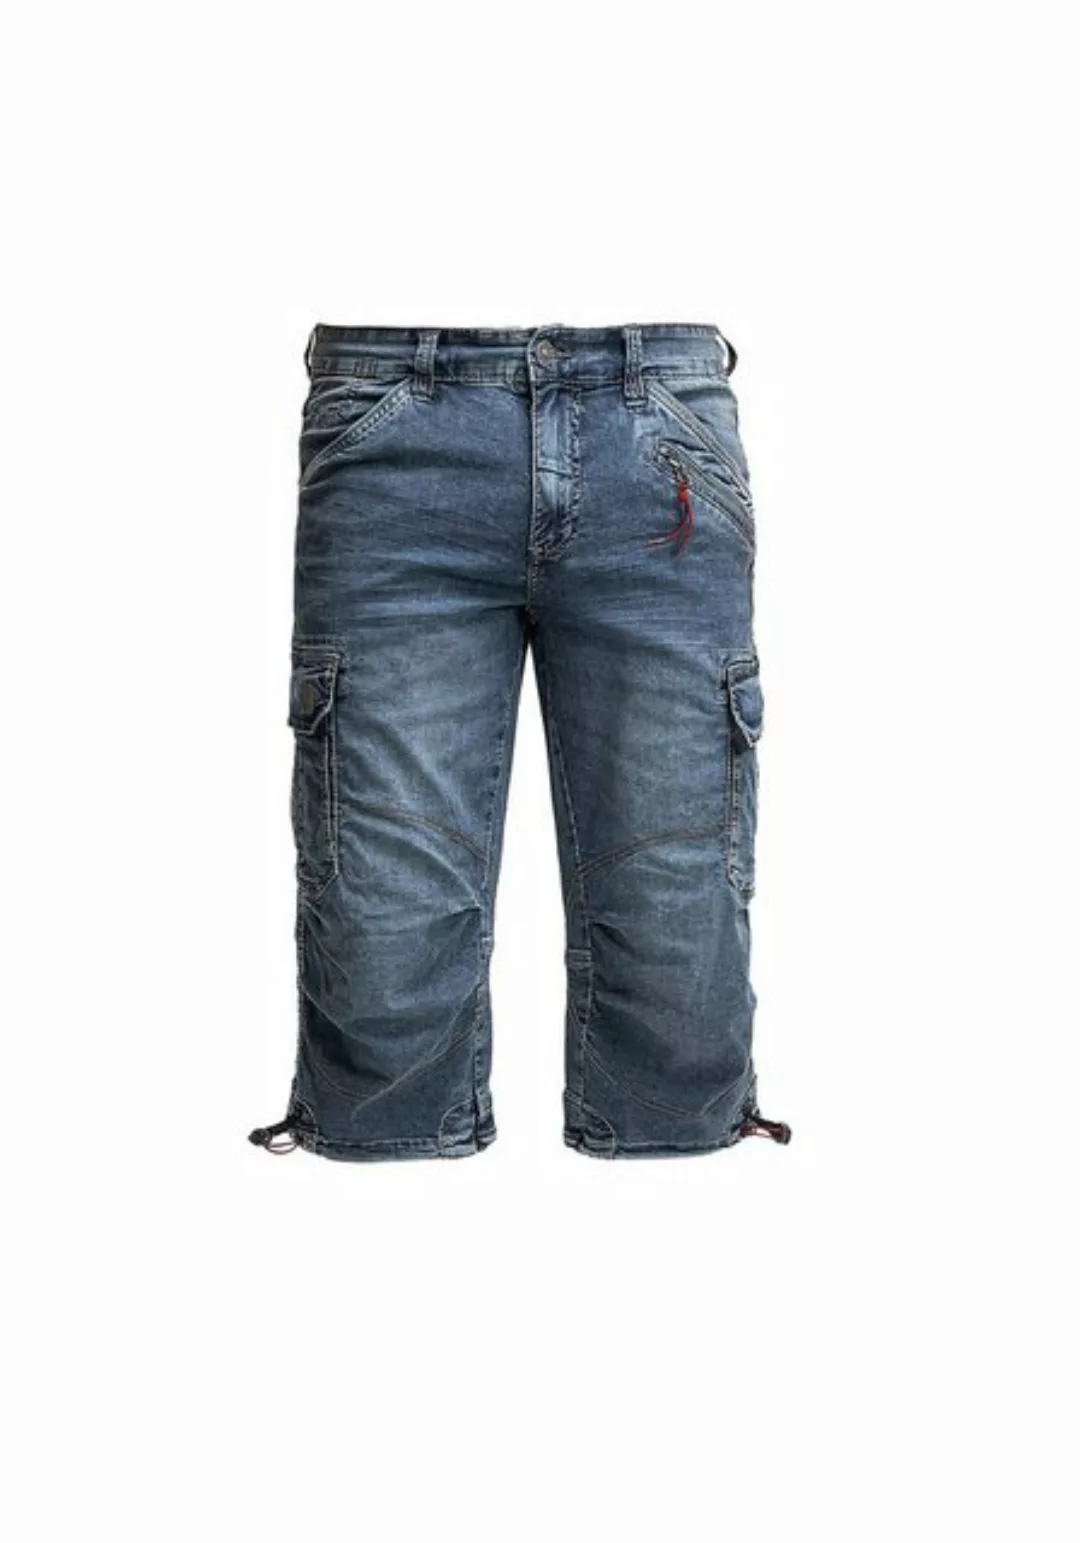 TIMEZONE Jeansshorts Shorts 3/4 Denim Pants loose Fit Mid Waist Jeansshorts günstig online kaufen